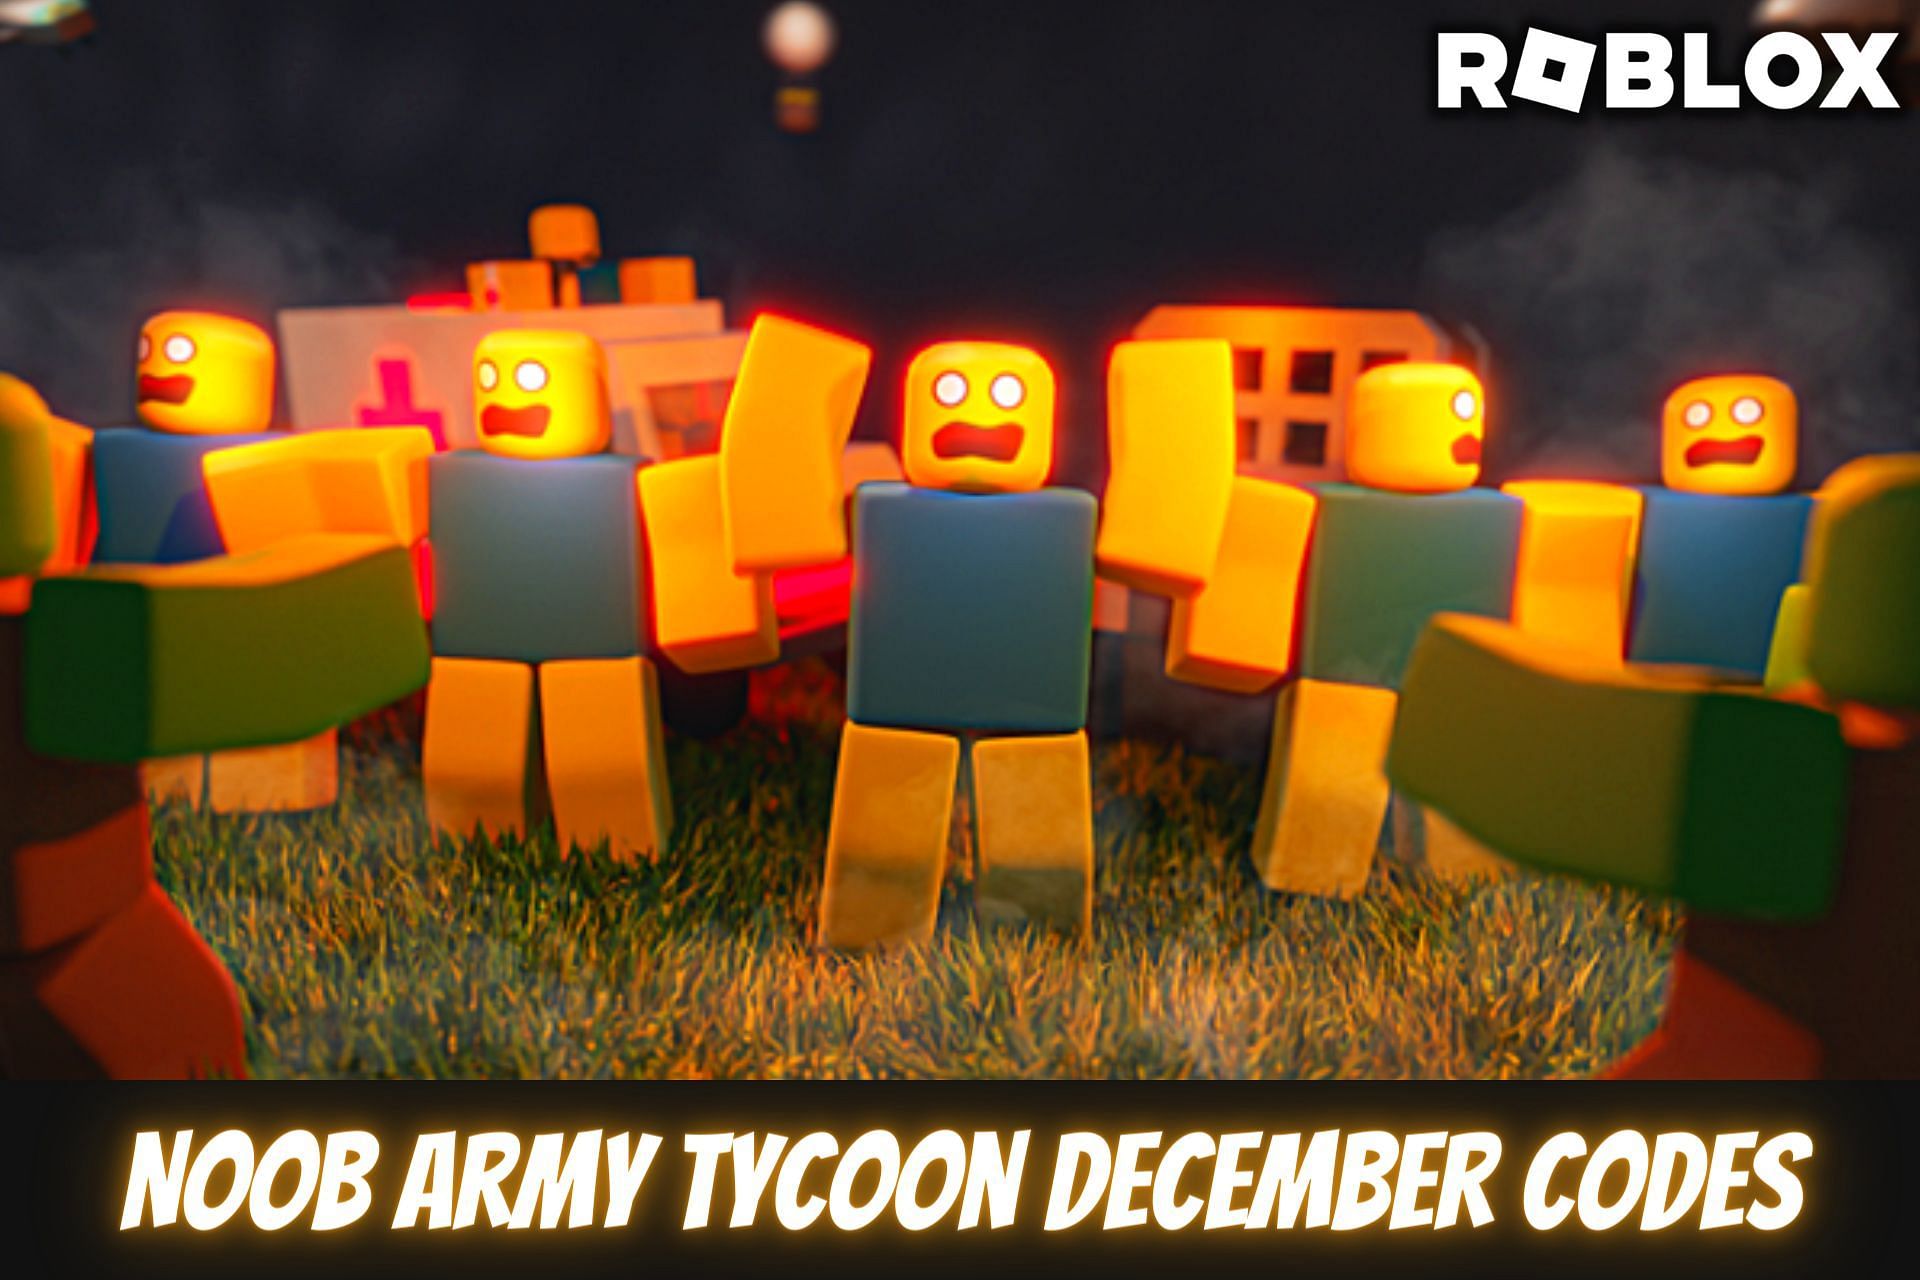 Roblox Noob Army Tycoon codes (December 2022)